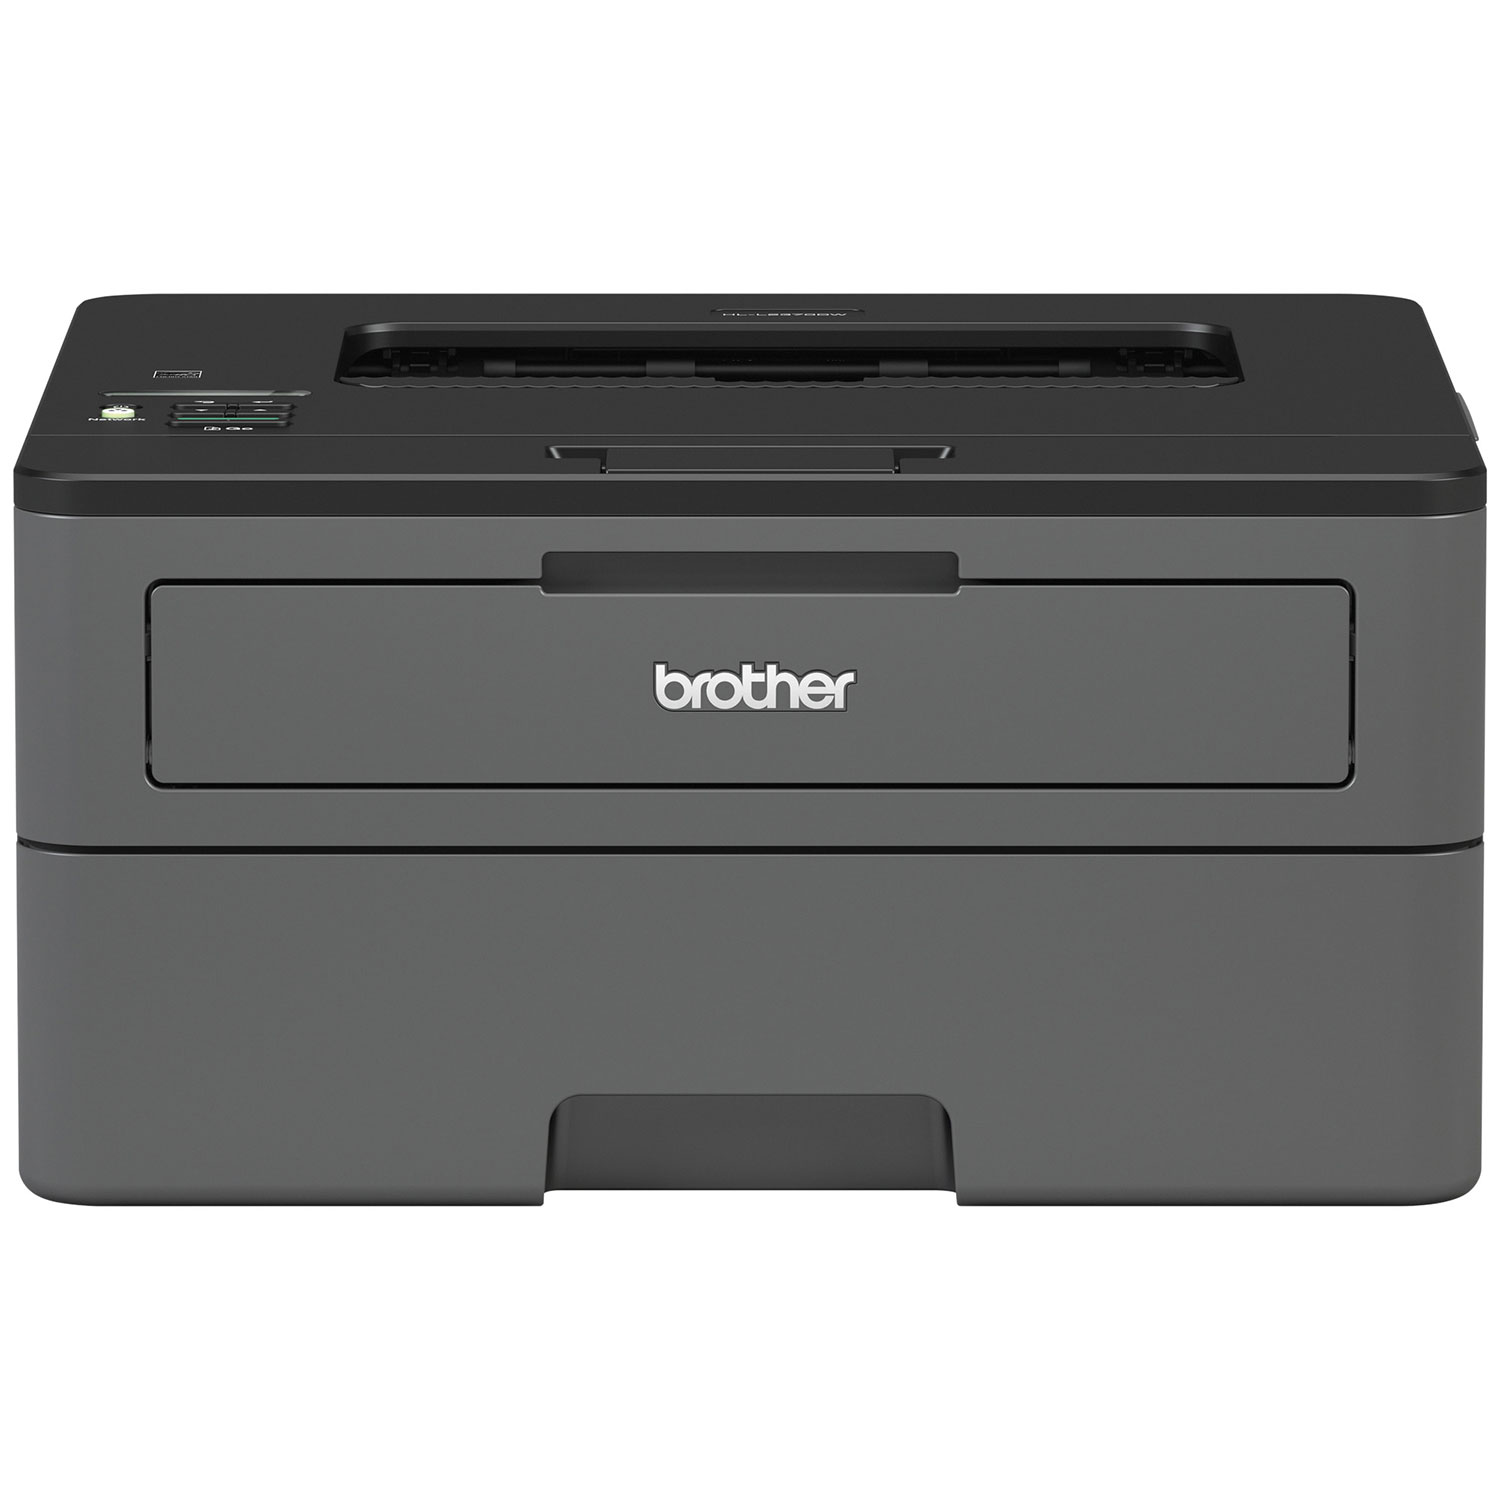 Brother Monochrome Wireless Laser Printer (HLL2370DW)